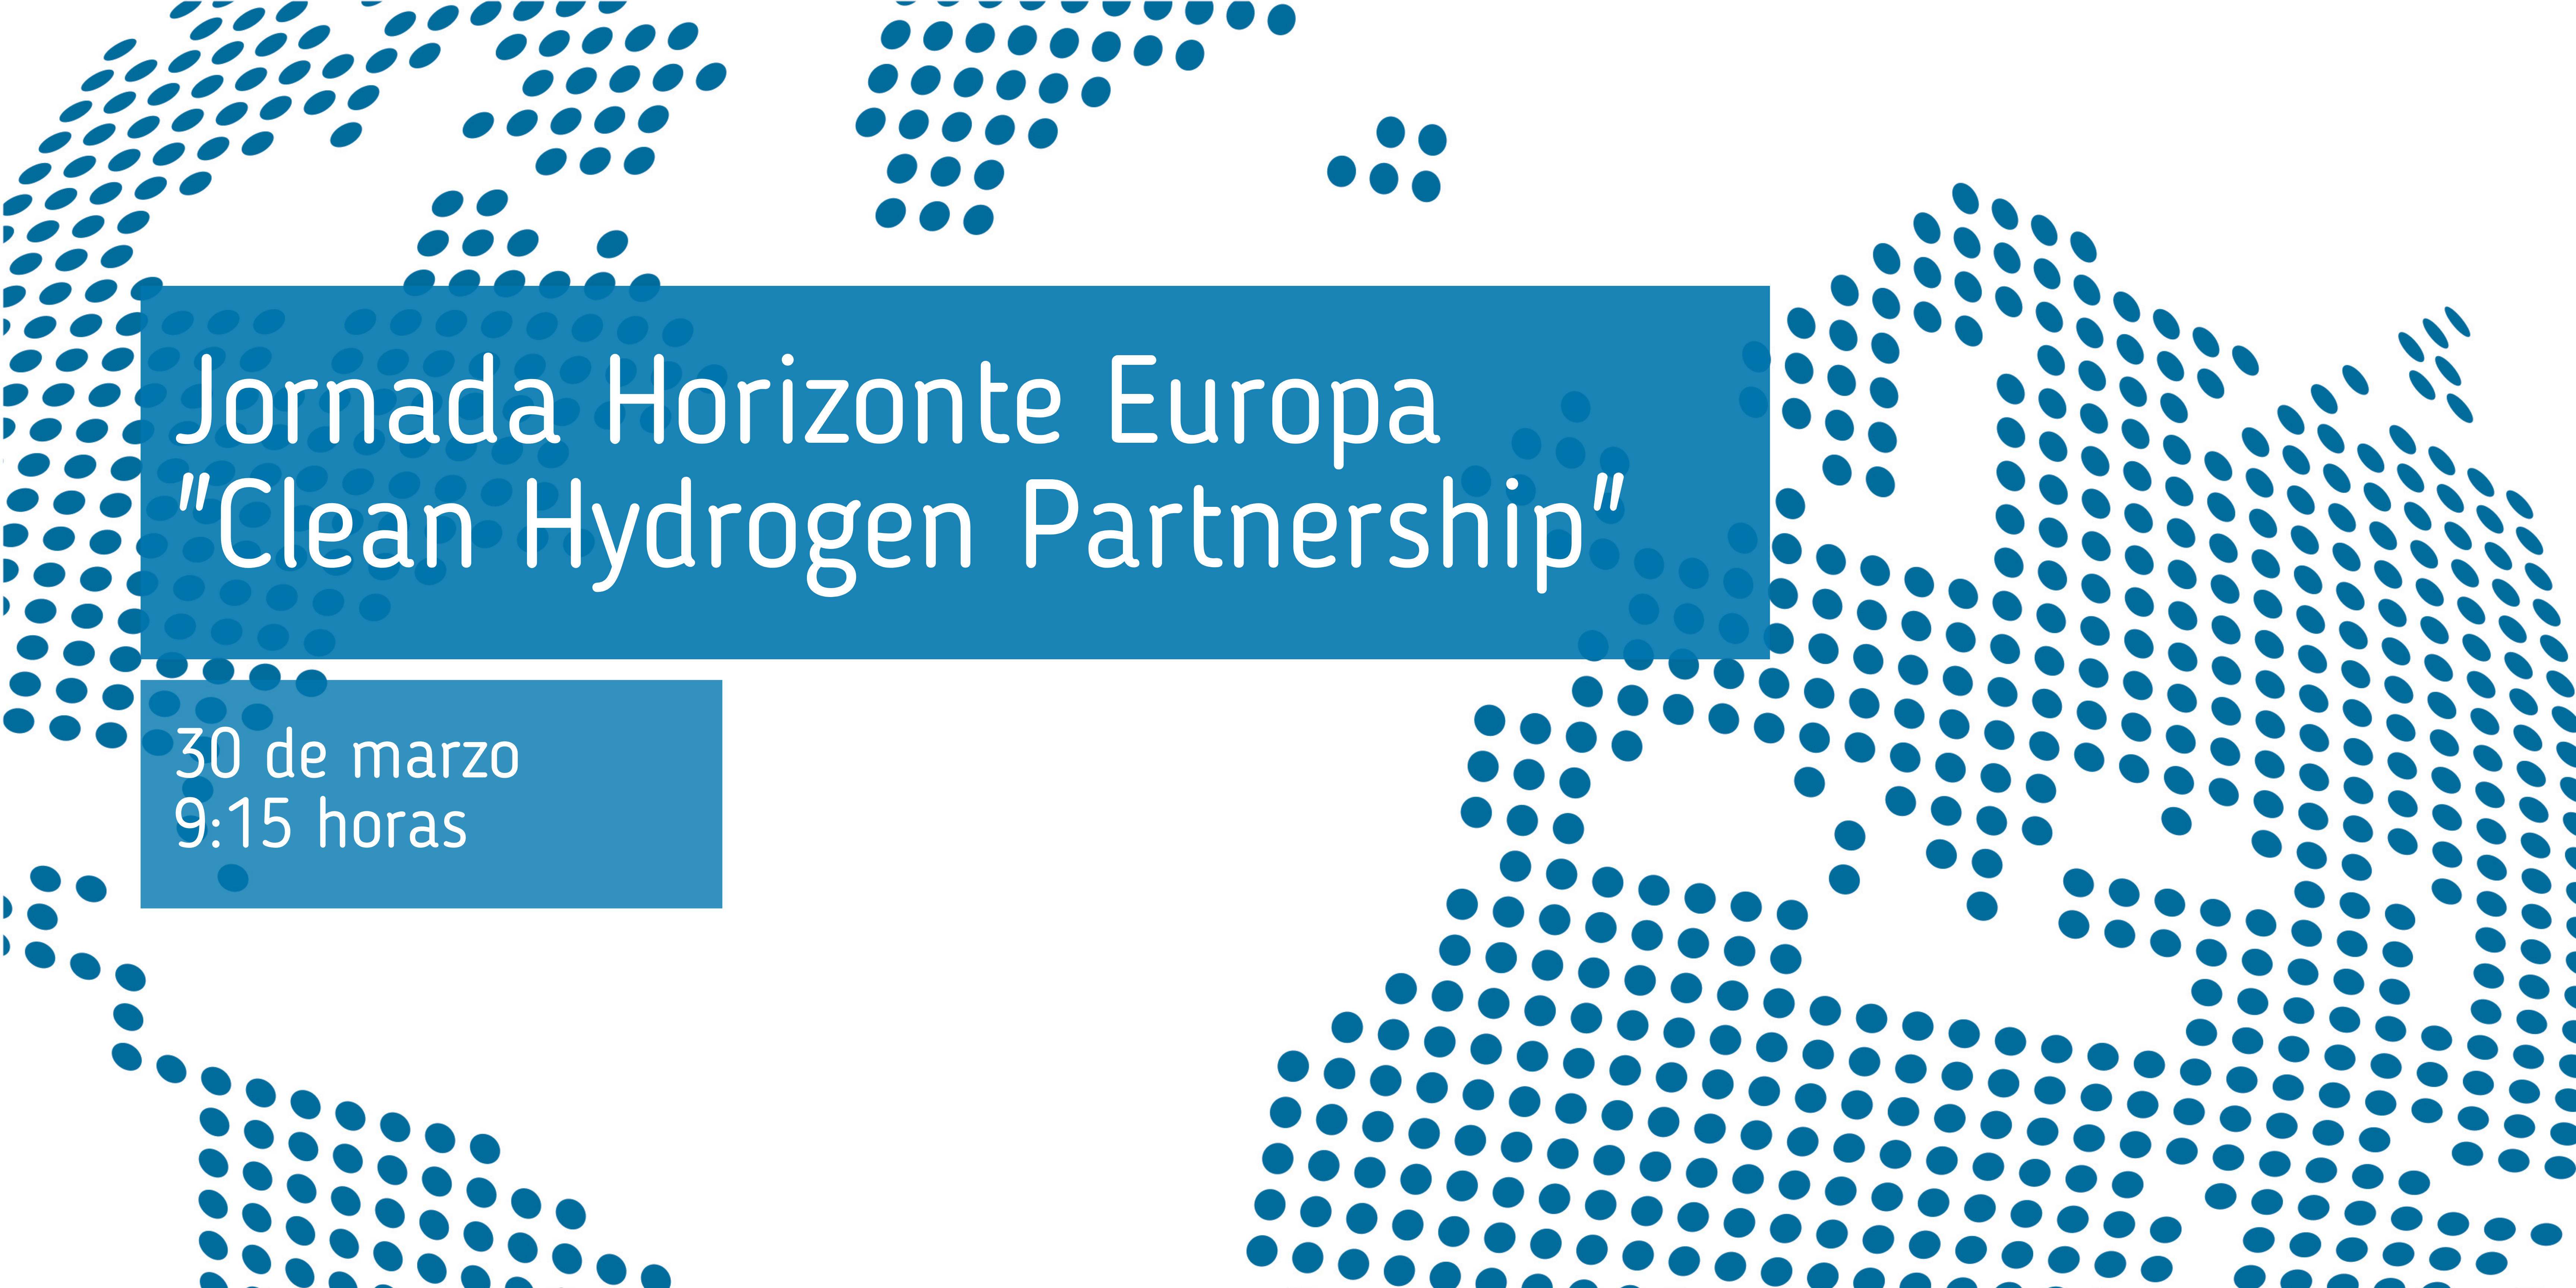 jornada_horizonte_europa_clean_hydrogen_partnership